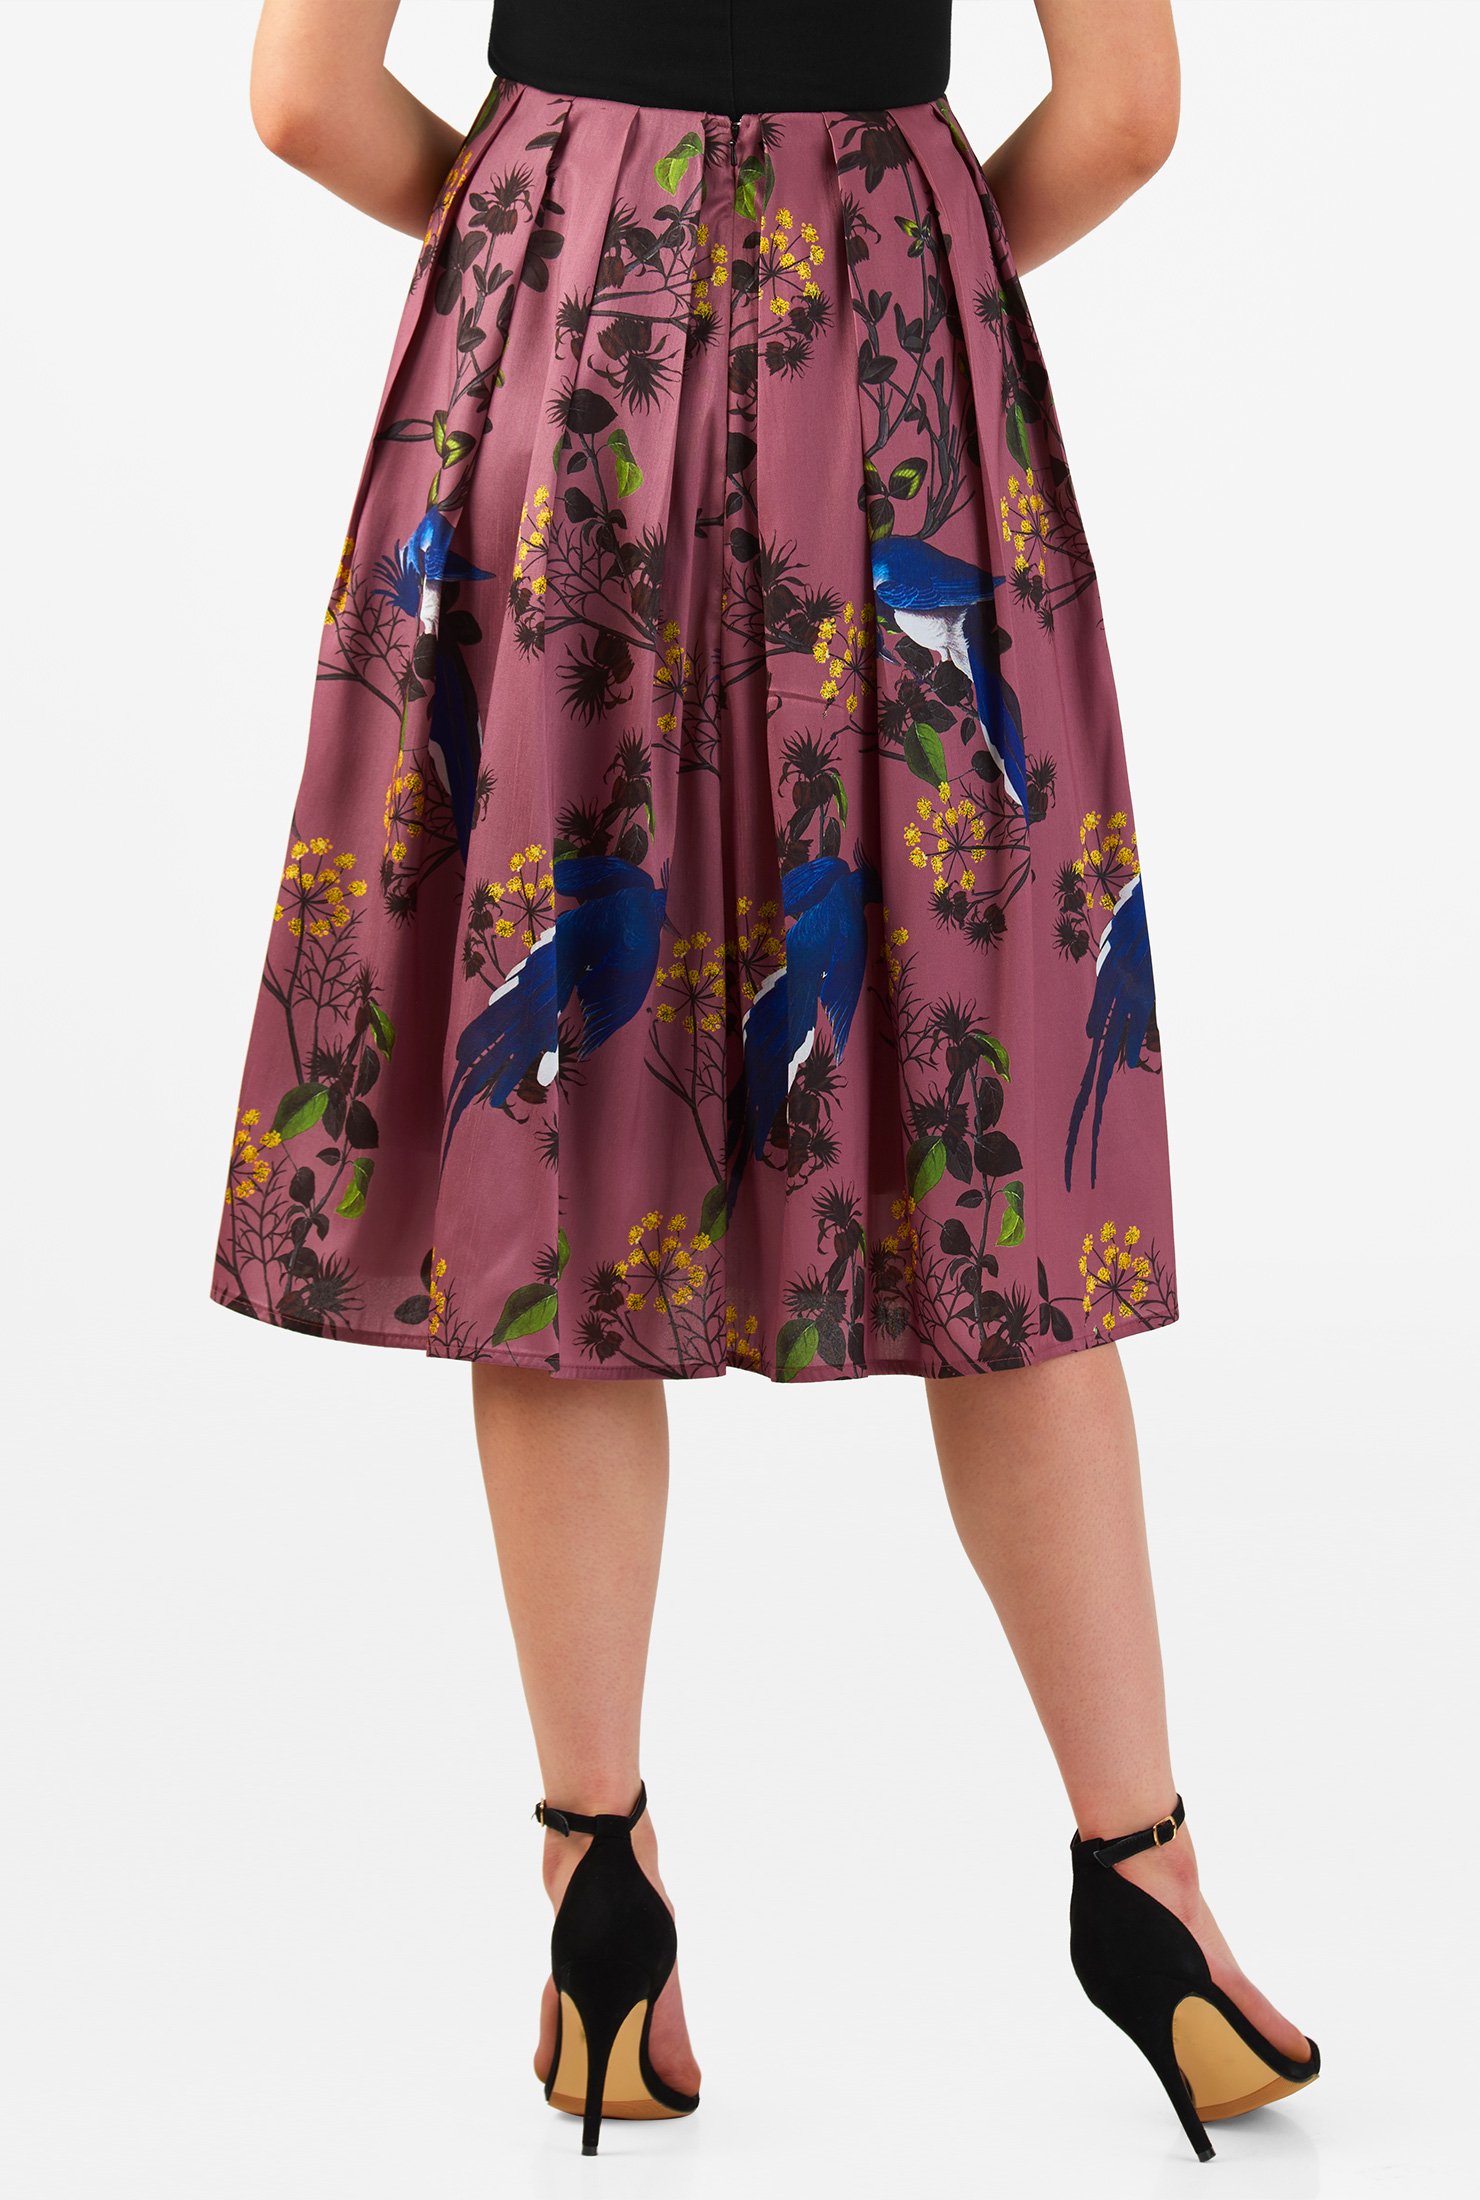 Shop Tropical bird and floral print dupioni skirt | eShakti